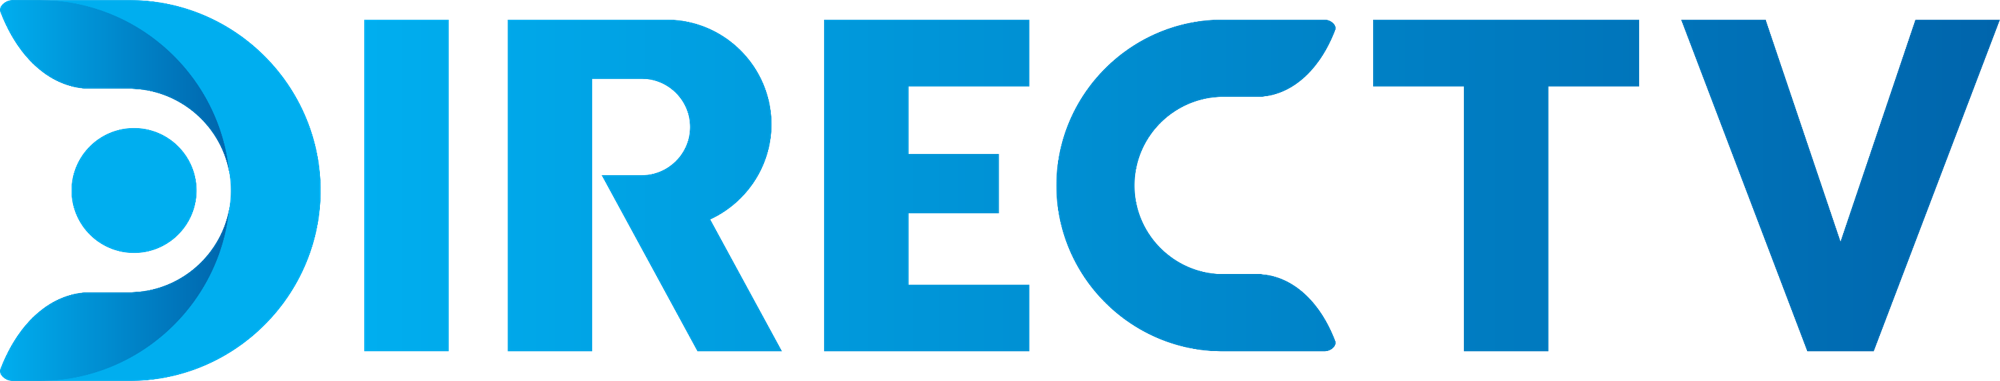 Directv logo